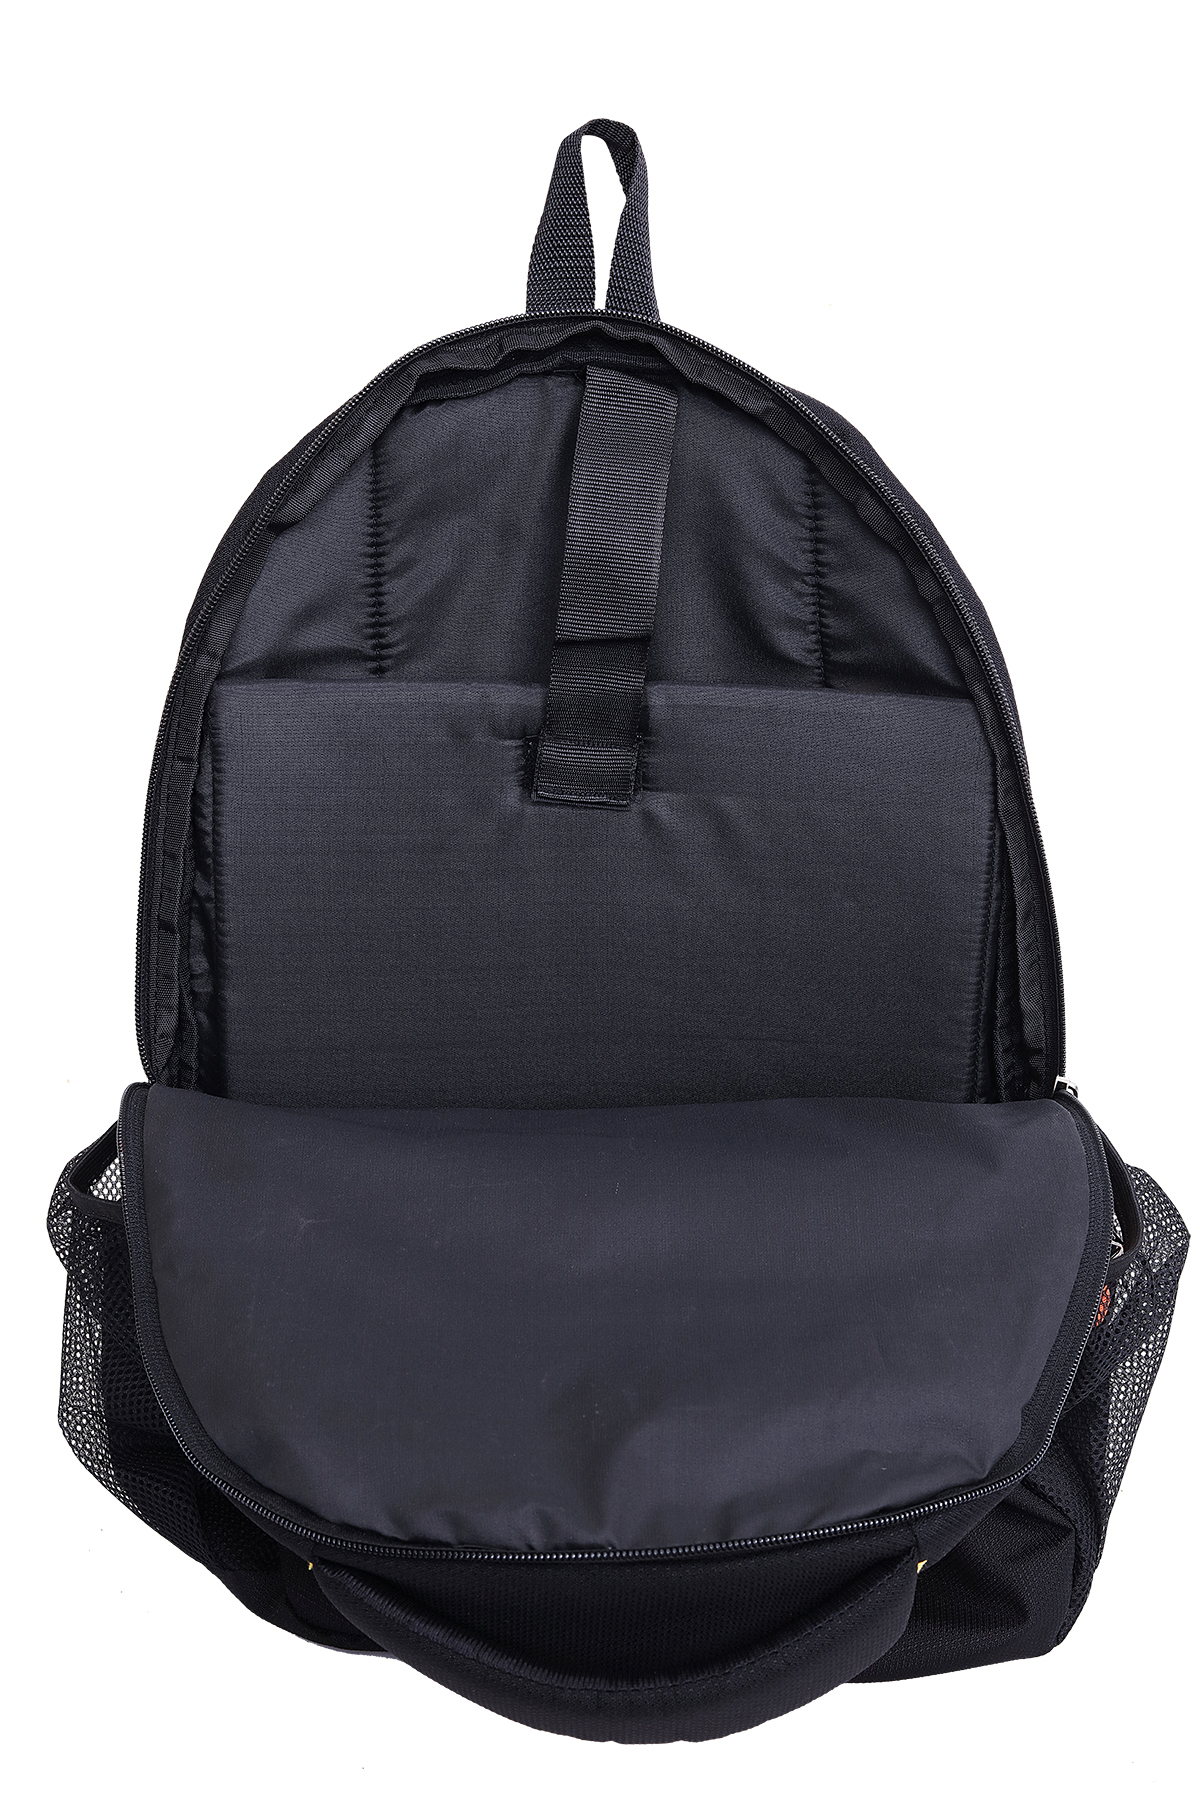 Hard Craft Unisex's Backpack 15inch Laptop Backpack Lightweight (Red-Black)